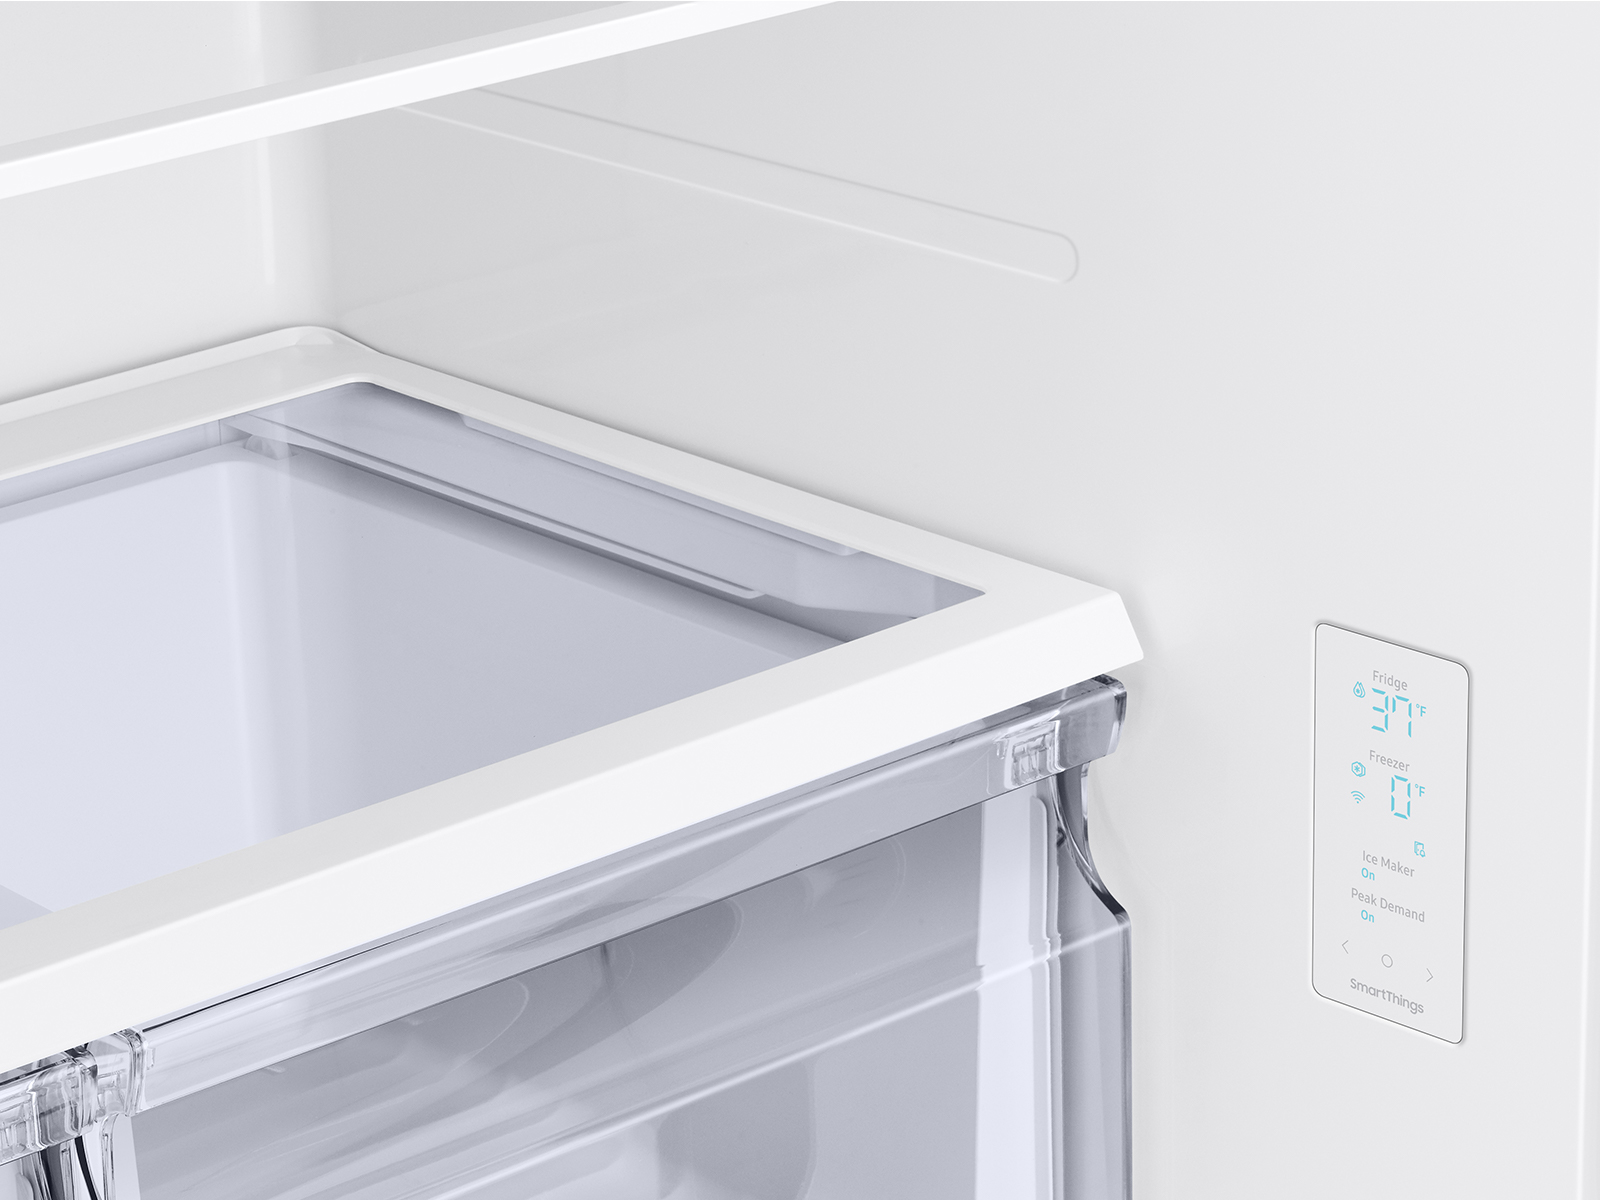 Samsung 30 in. 22.0 cu. ft. Smart French Door Refrigerator with